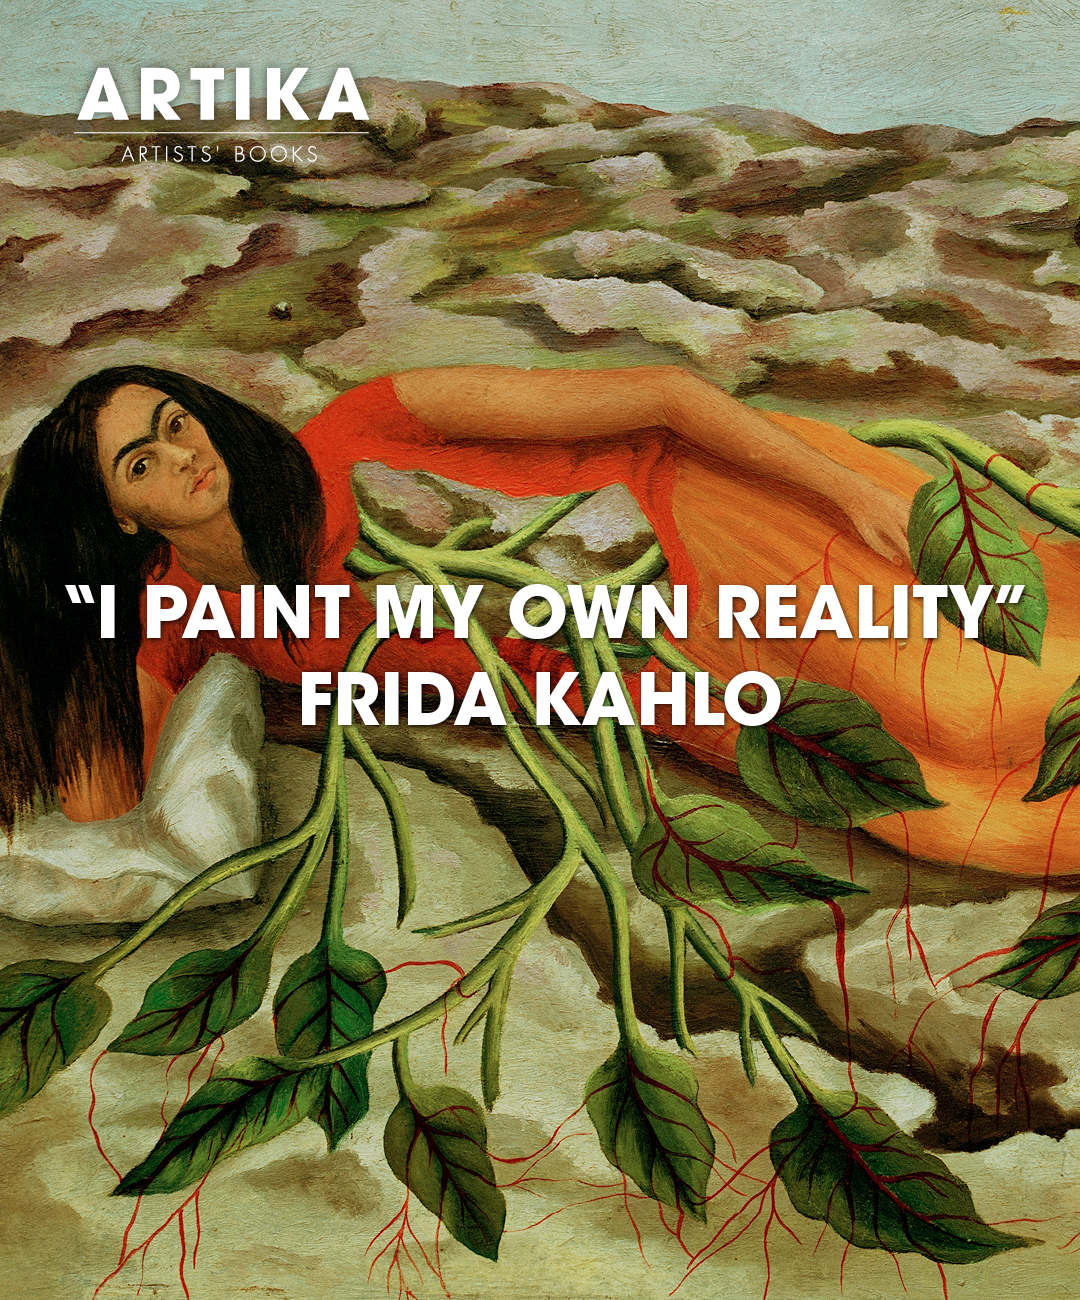 The dreams of Frida Kahlo -ARTIKA